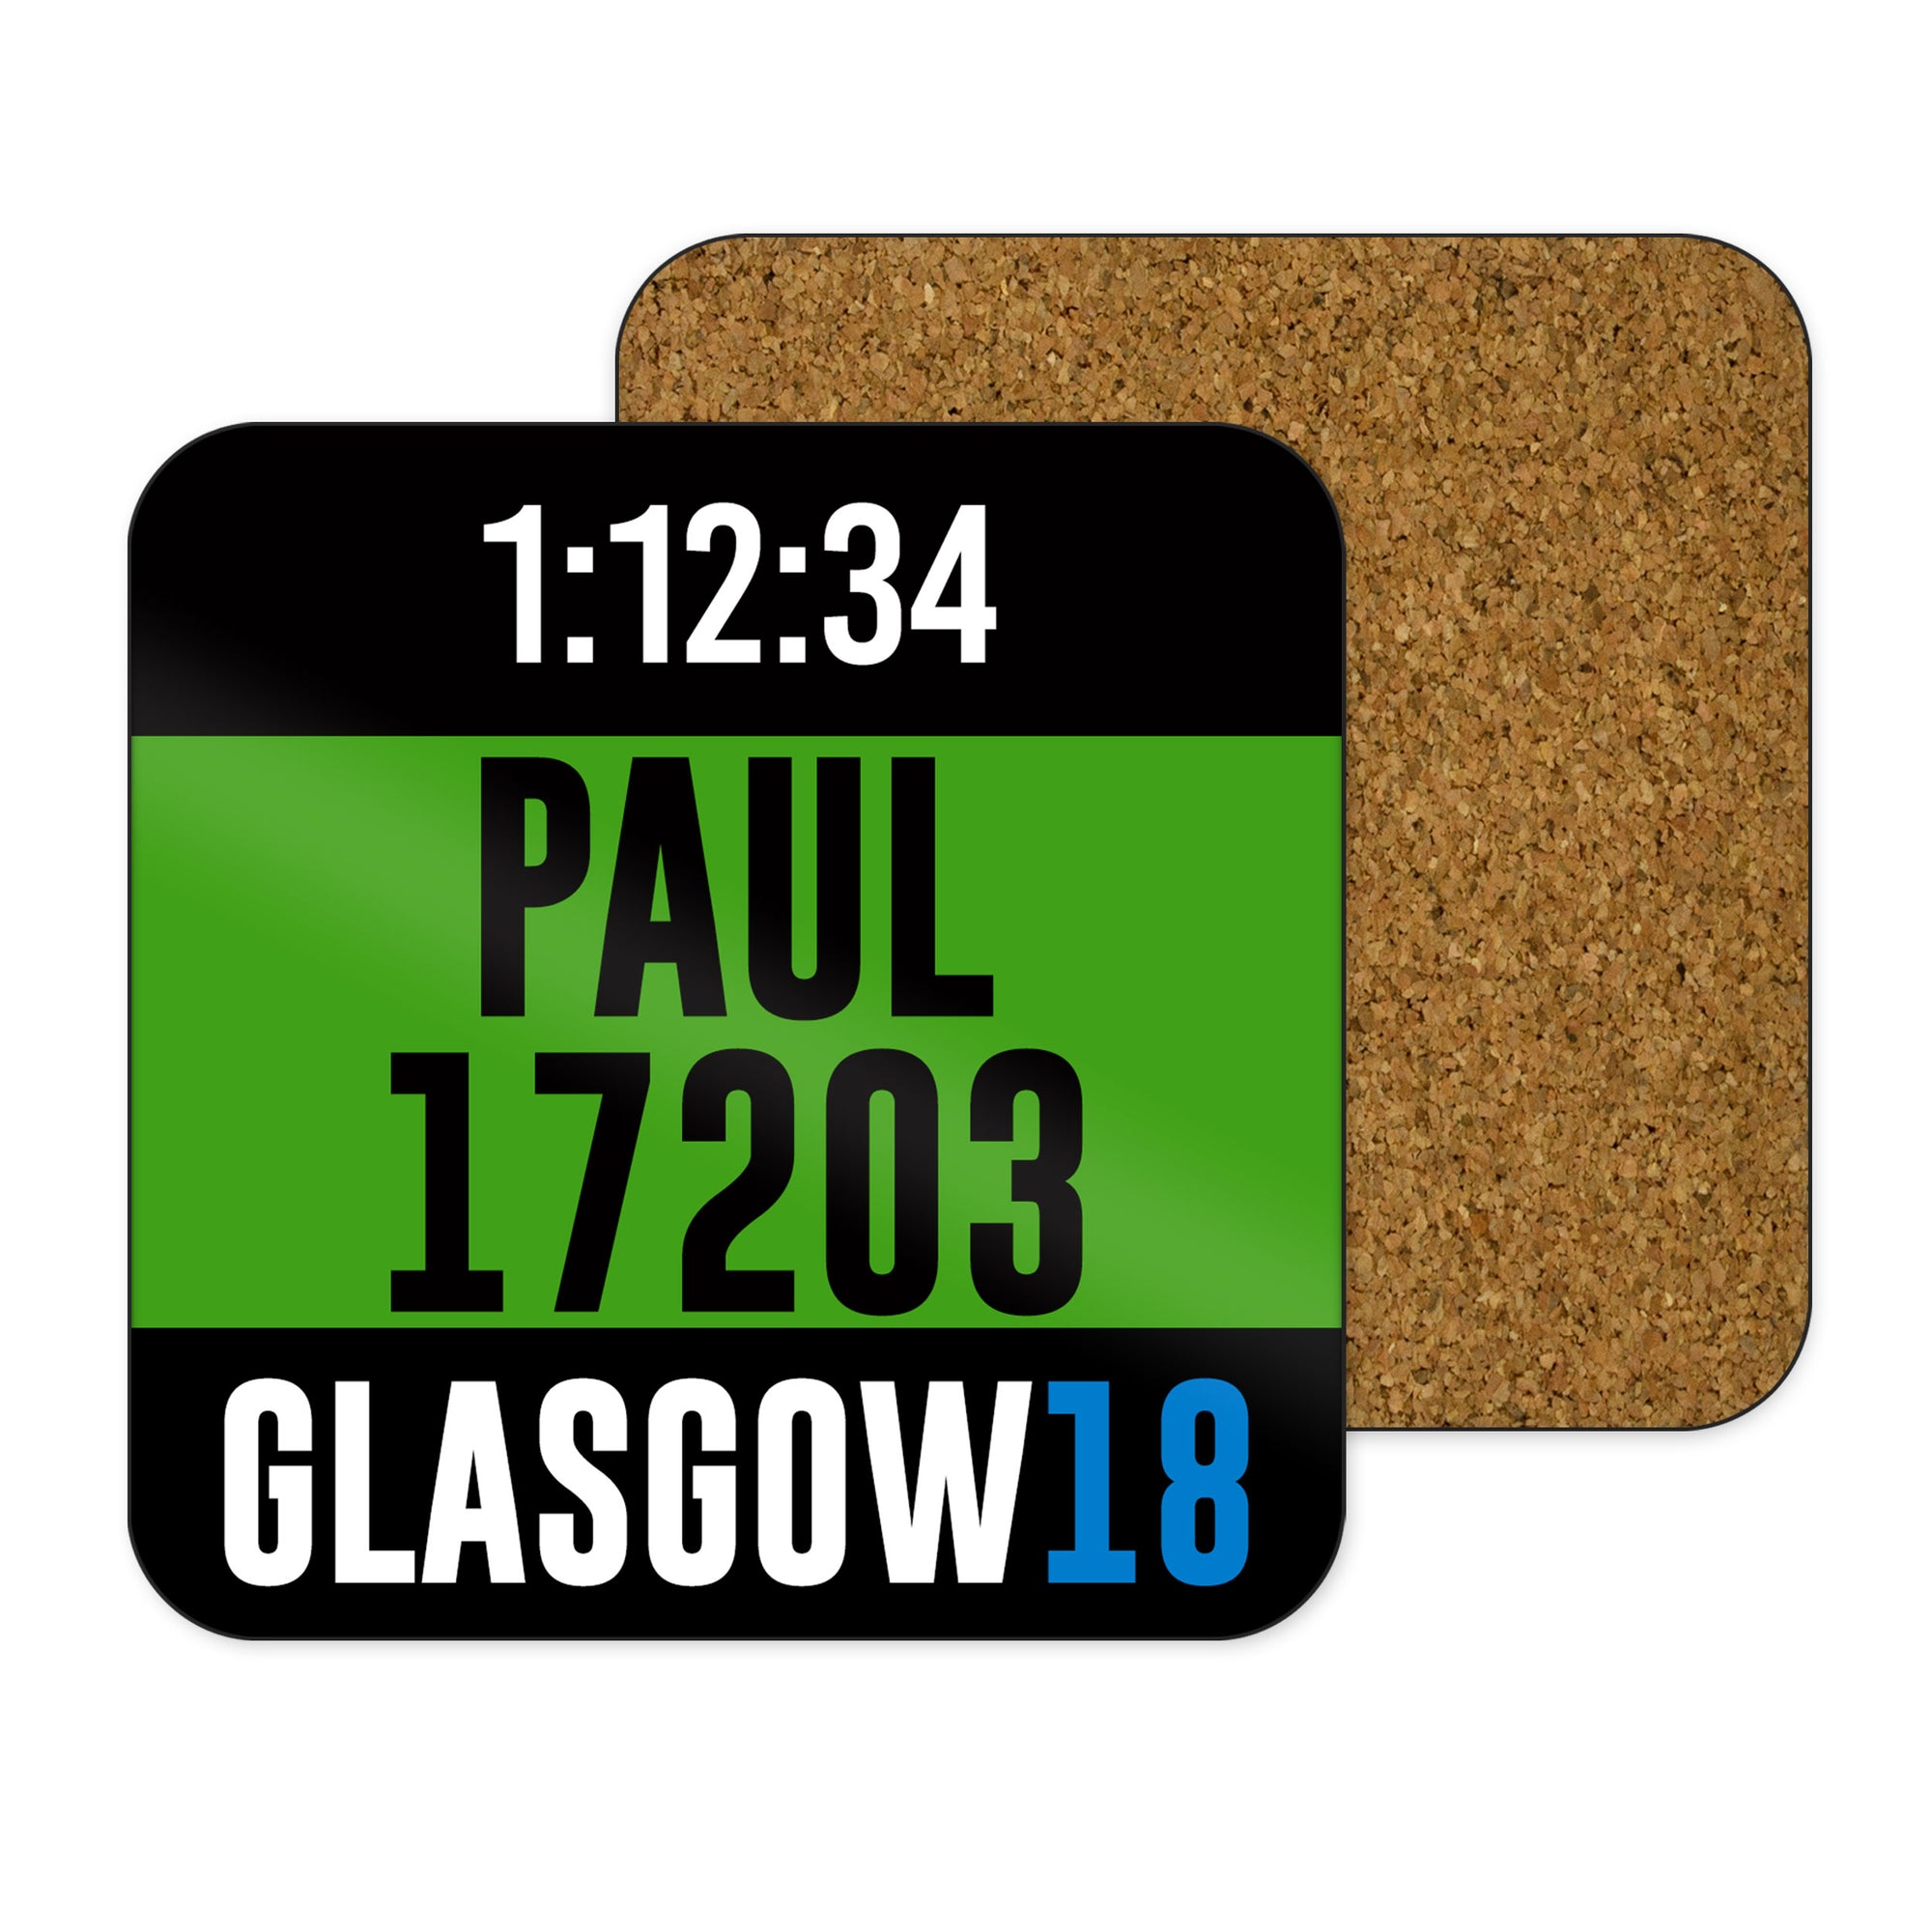 Personalised Great Scottish Run Bib Coaster